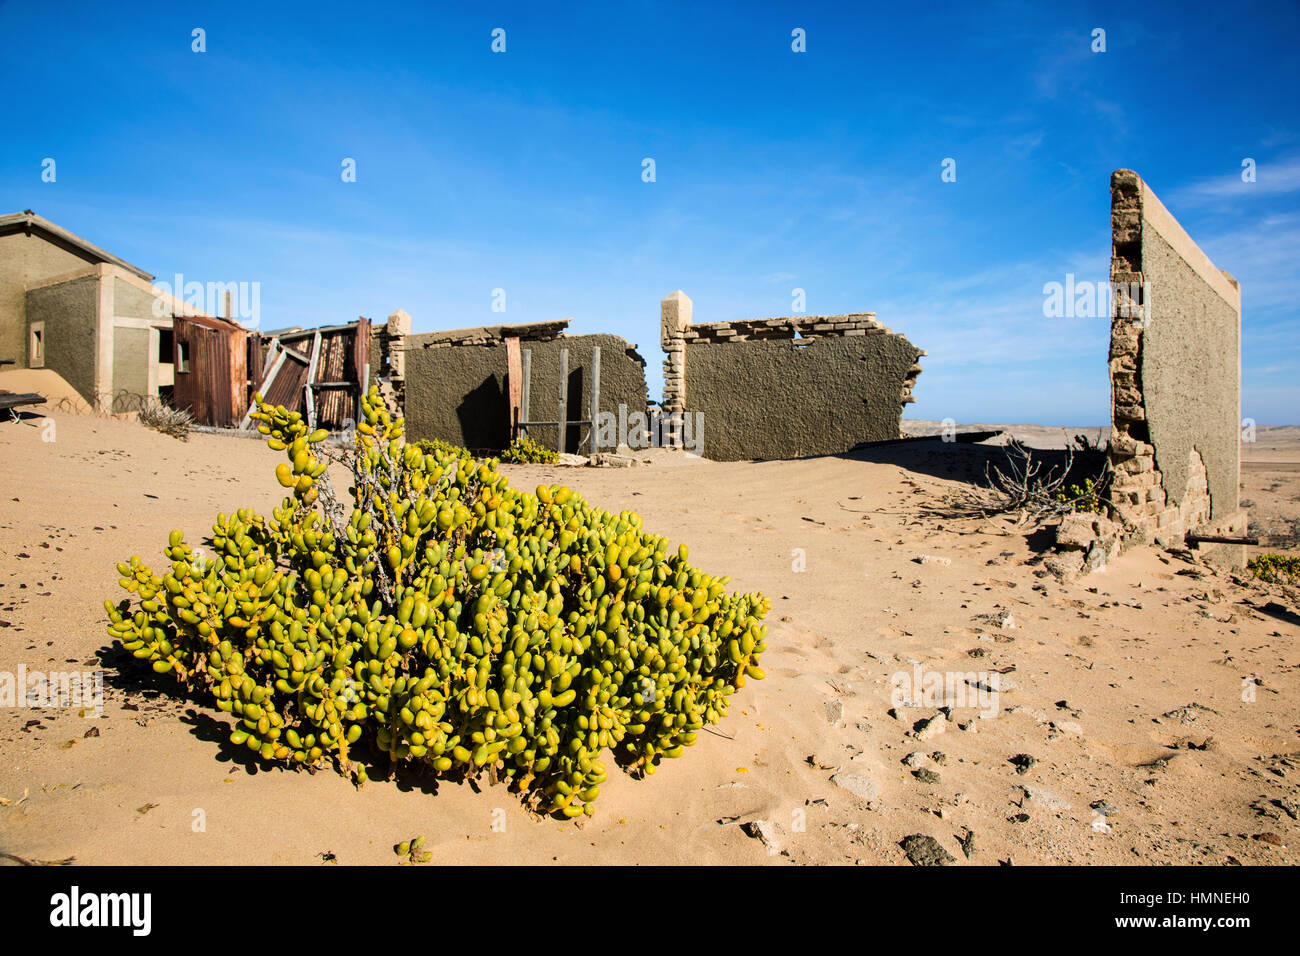 Sukkulente pflanze Augea capensis, Kolmanskuppe, Kolmannskuppe, Ghost Town, Wüste Namib, Namibia, Afrika, von Monika Hrdinova/Dembinsky Foto Assoc Stockfoto